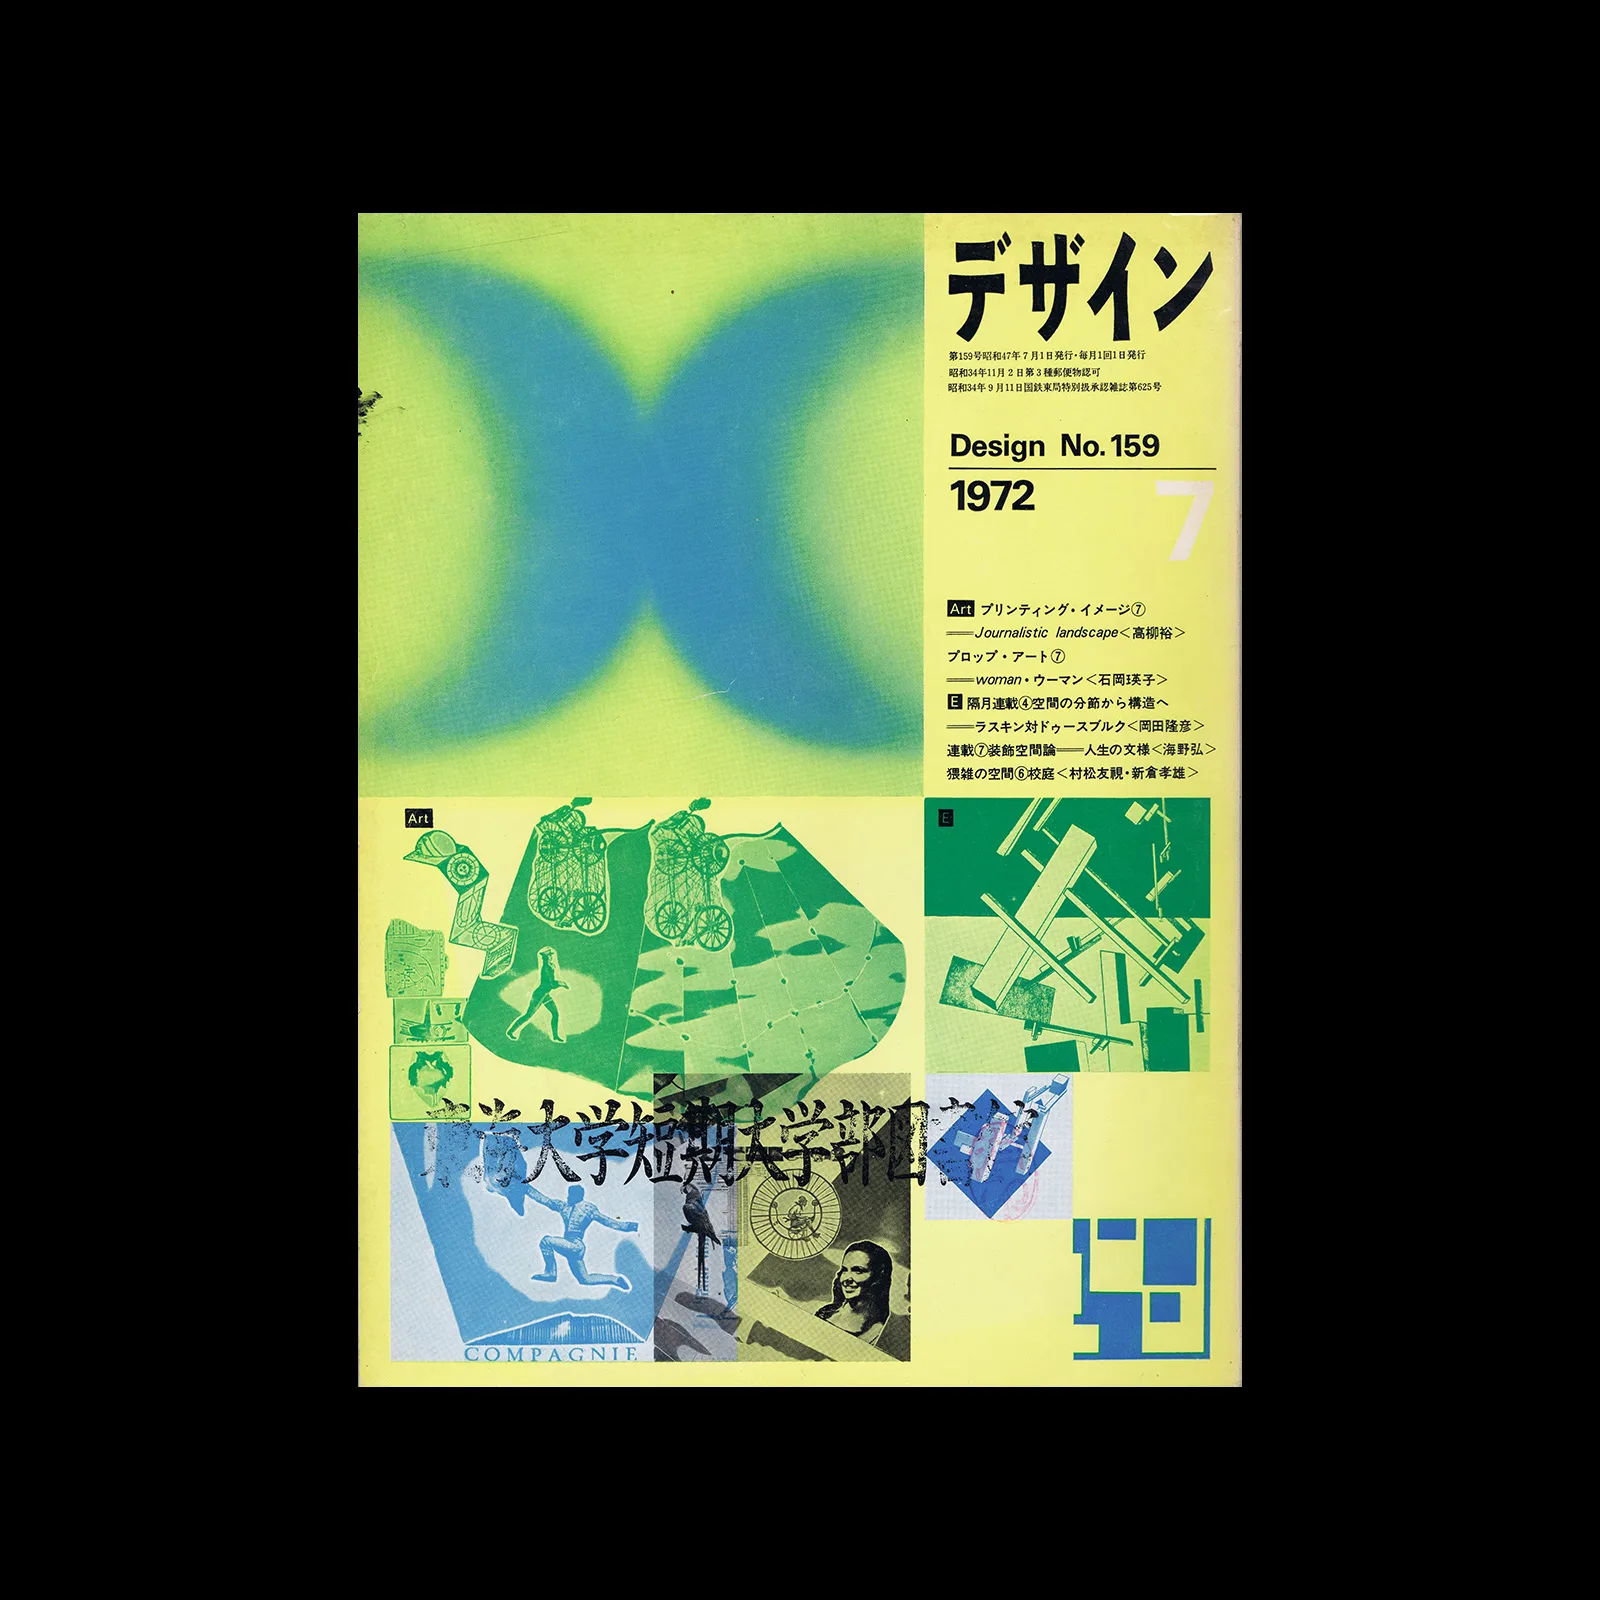 Design No.159 July 1972. Cover design by Koji Kusafuka